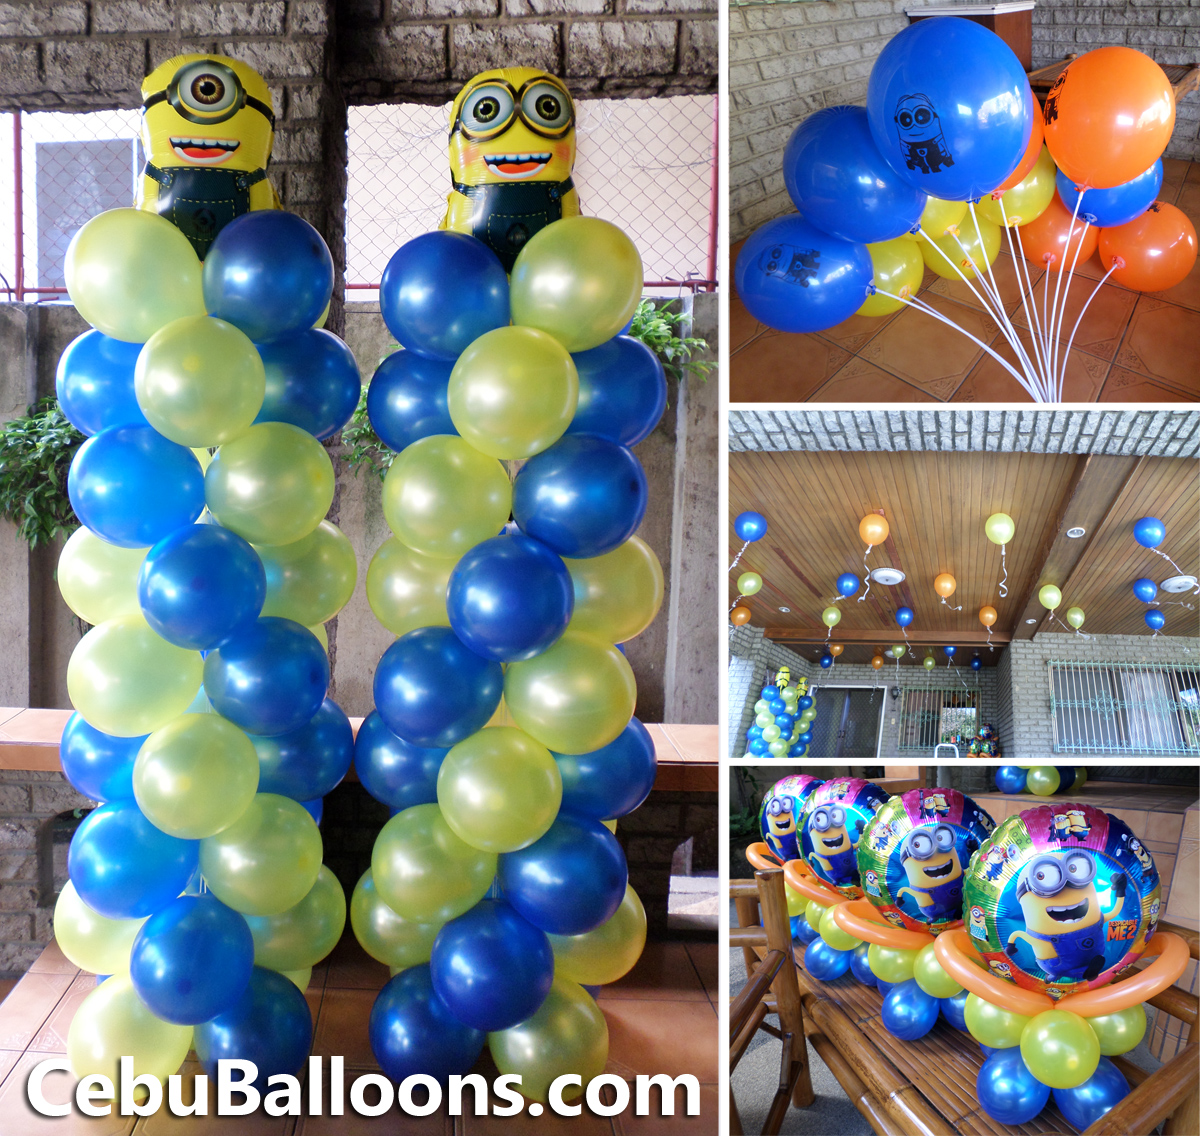 Minions (Despicable Me) | Cebu Balloons and Party Supplies